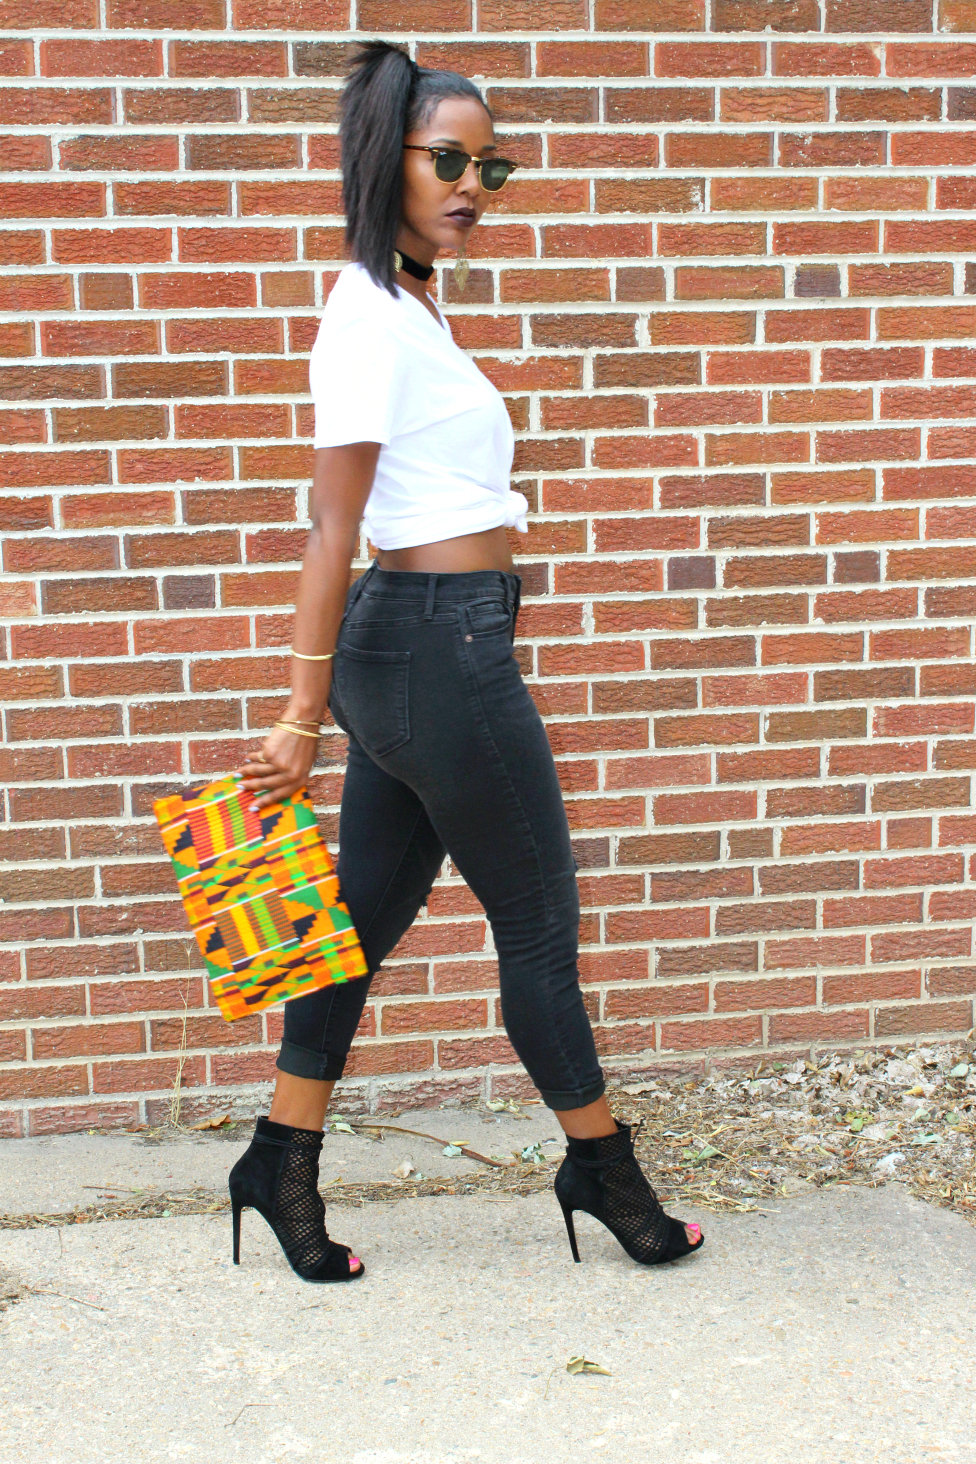 Blogging – Black Girl Chic – Medium